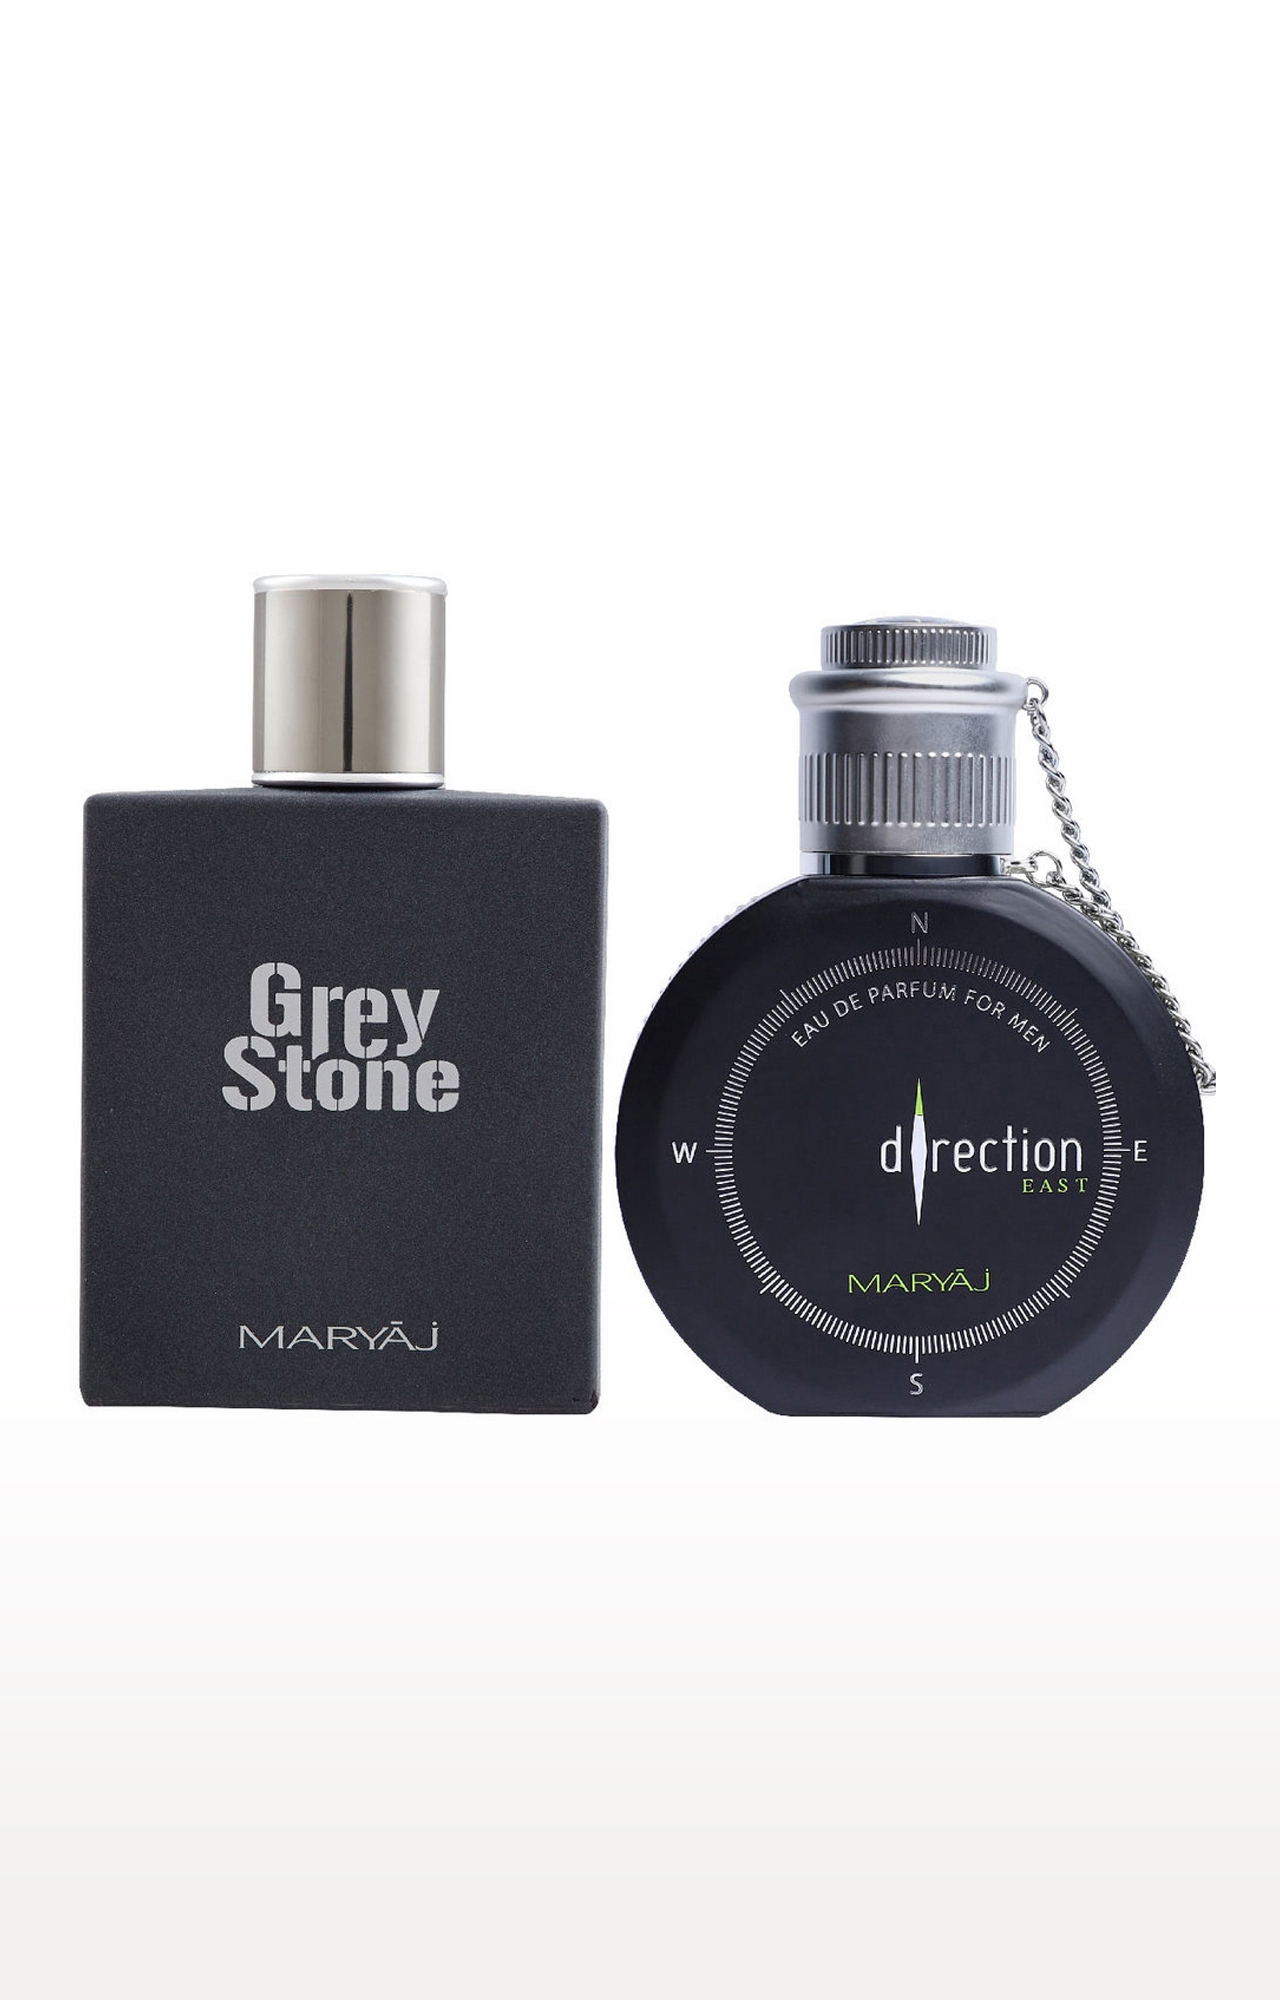 Maryaj | Maryaj Grey Stone Eau De Parfum Perfume 100ml for Men and Maryaj Direction East Eau De Parfum Perfume 100ml for Men 0